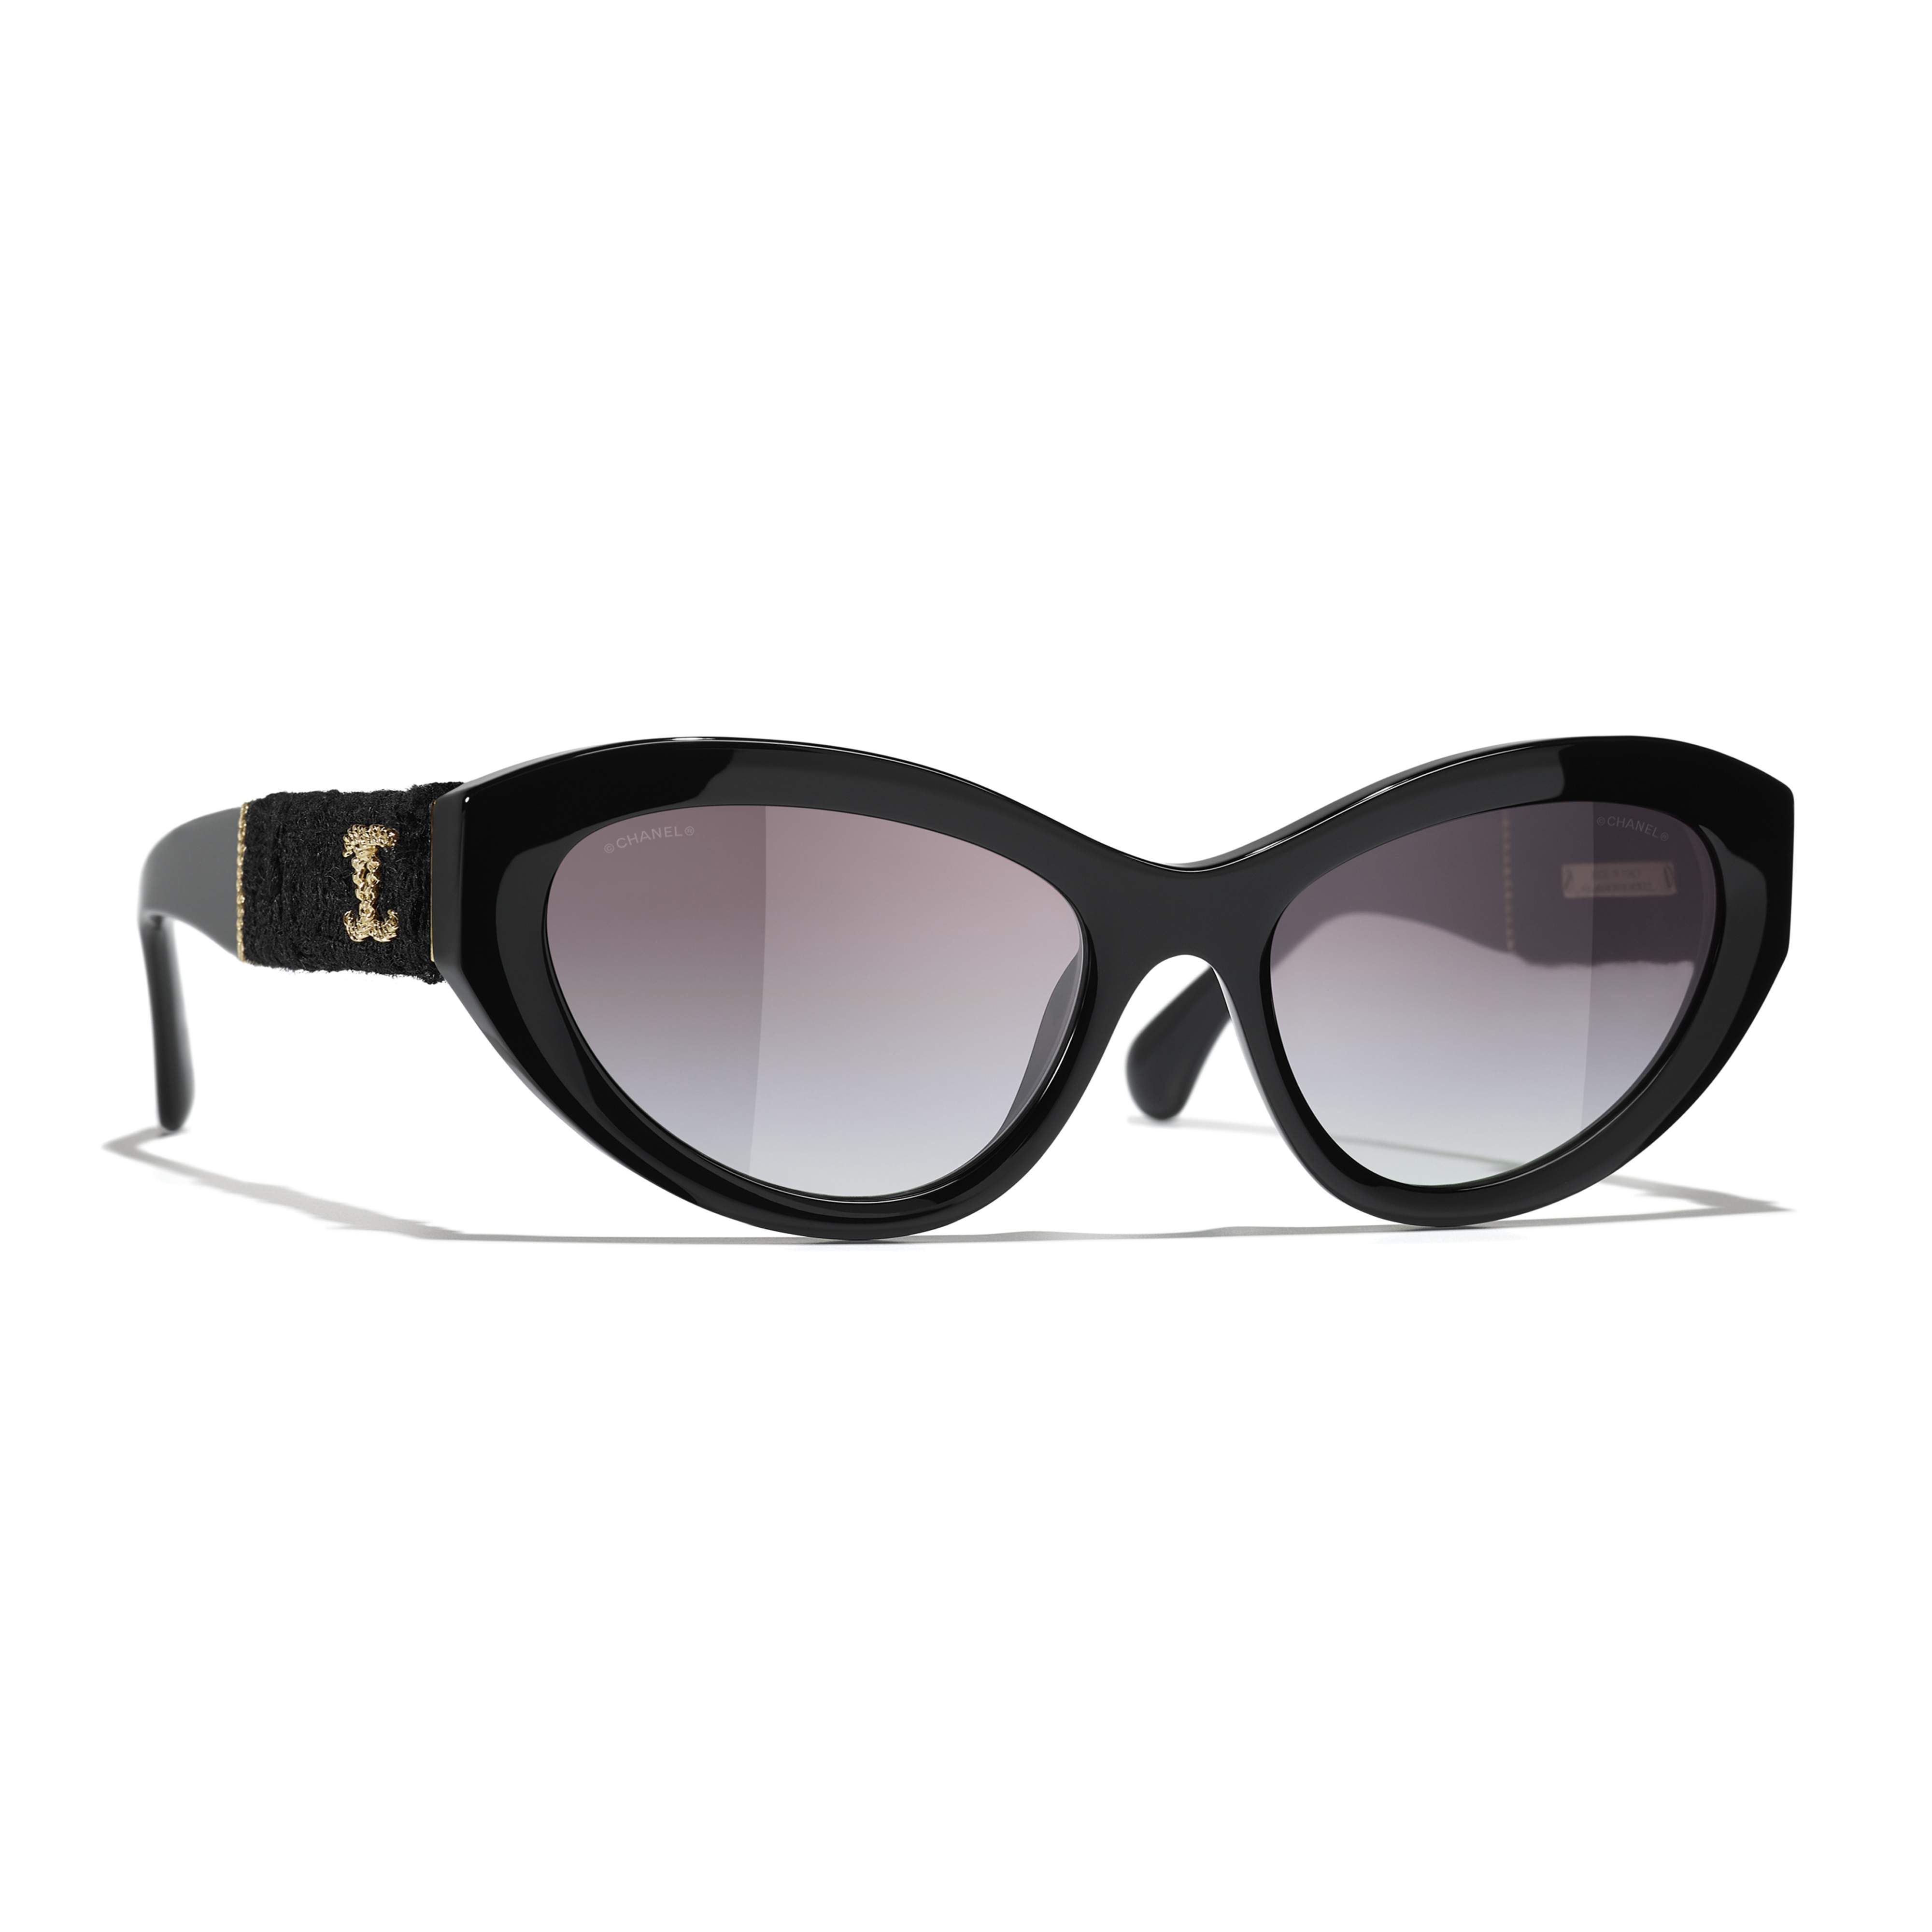 black sunglasses chanel